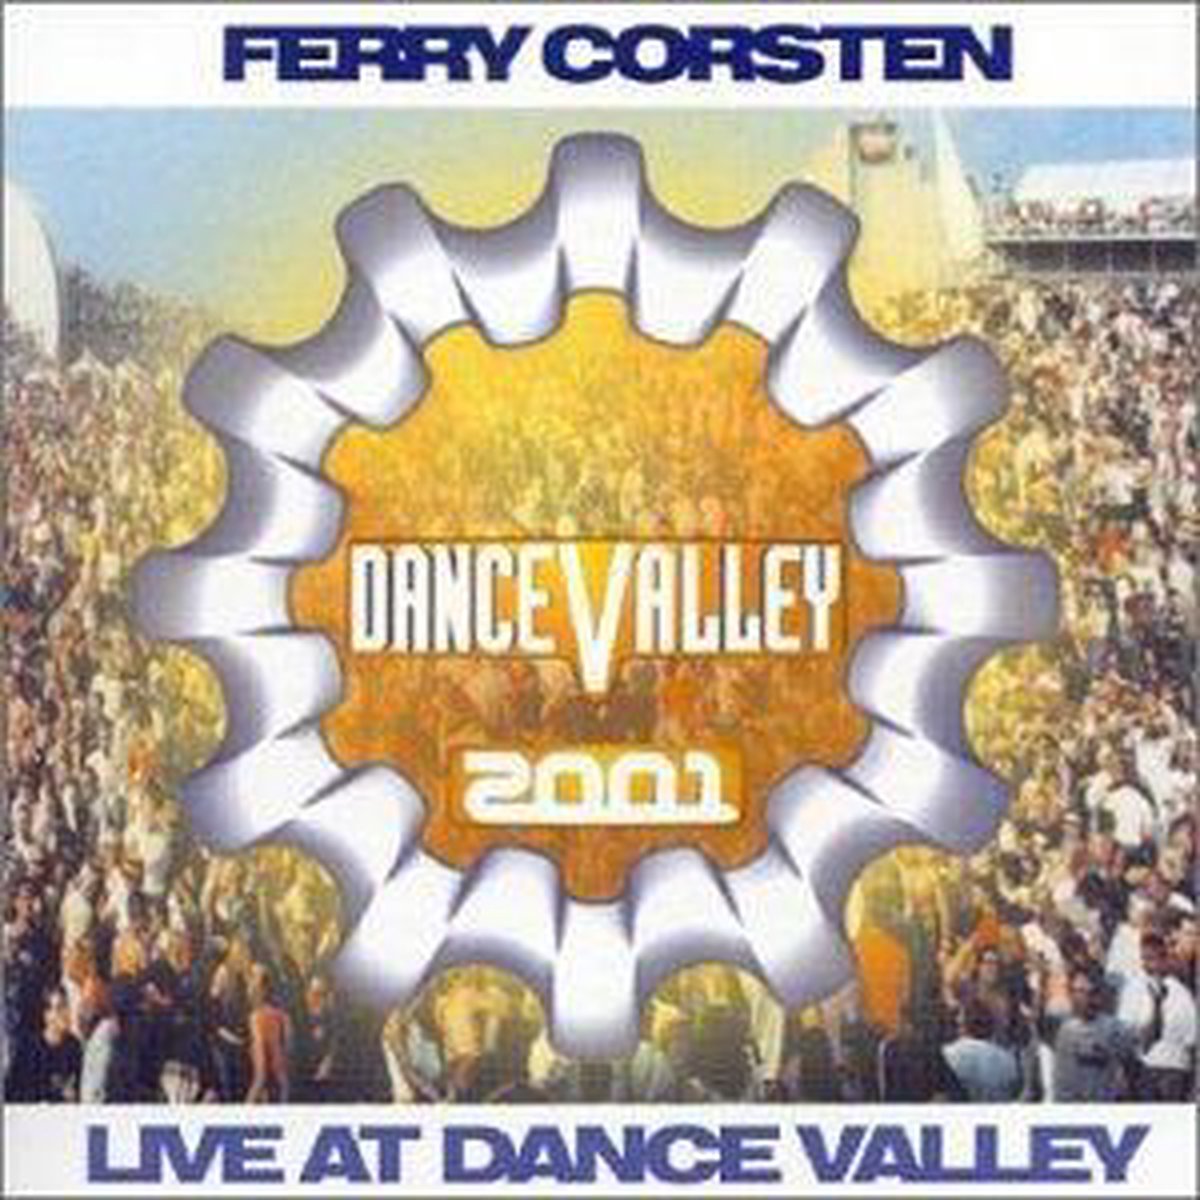 Live At Dance Valley 2001 - Ferry Corsten